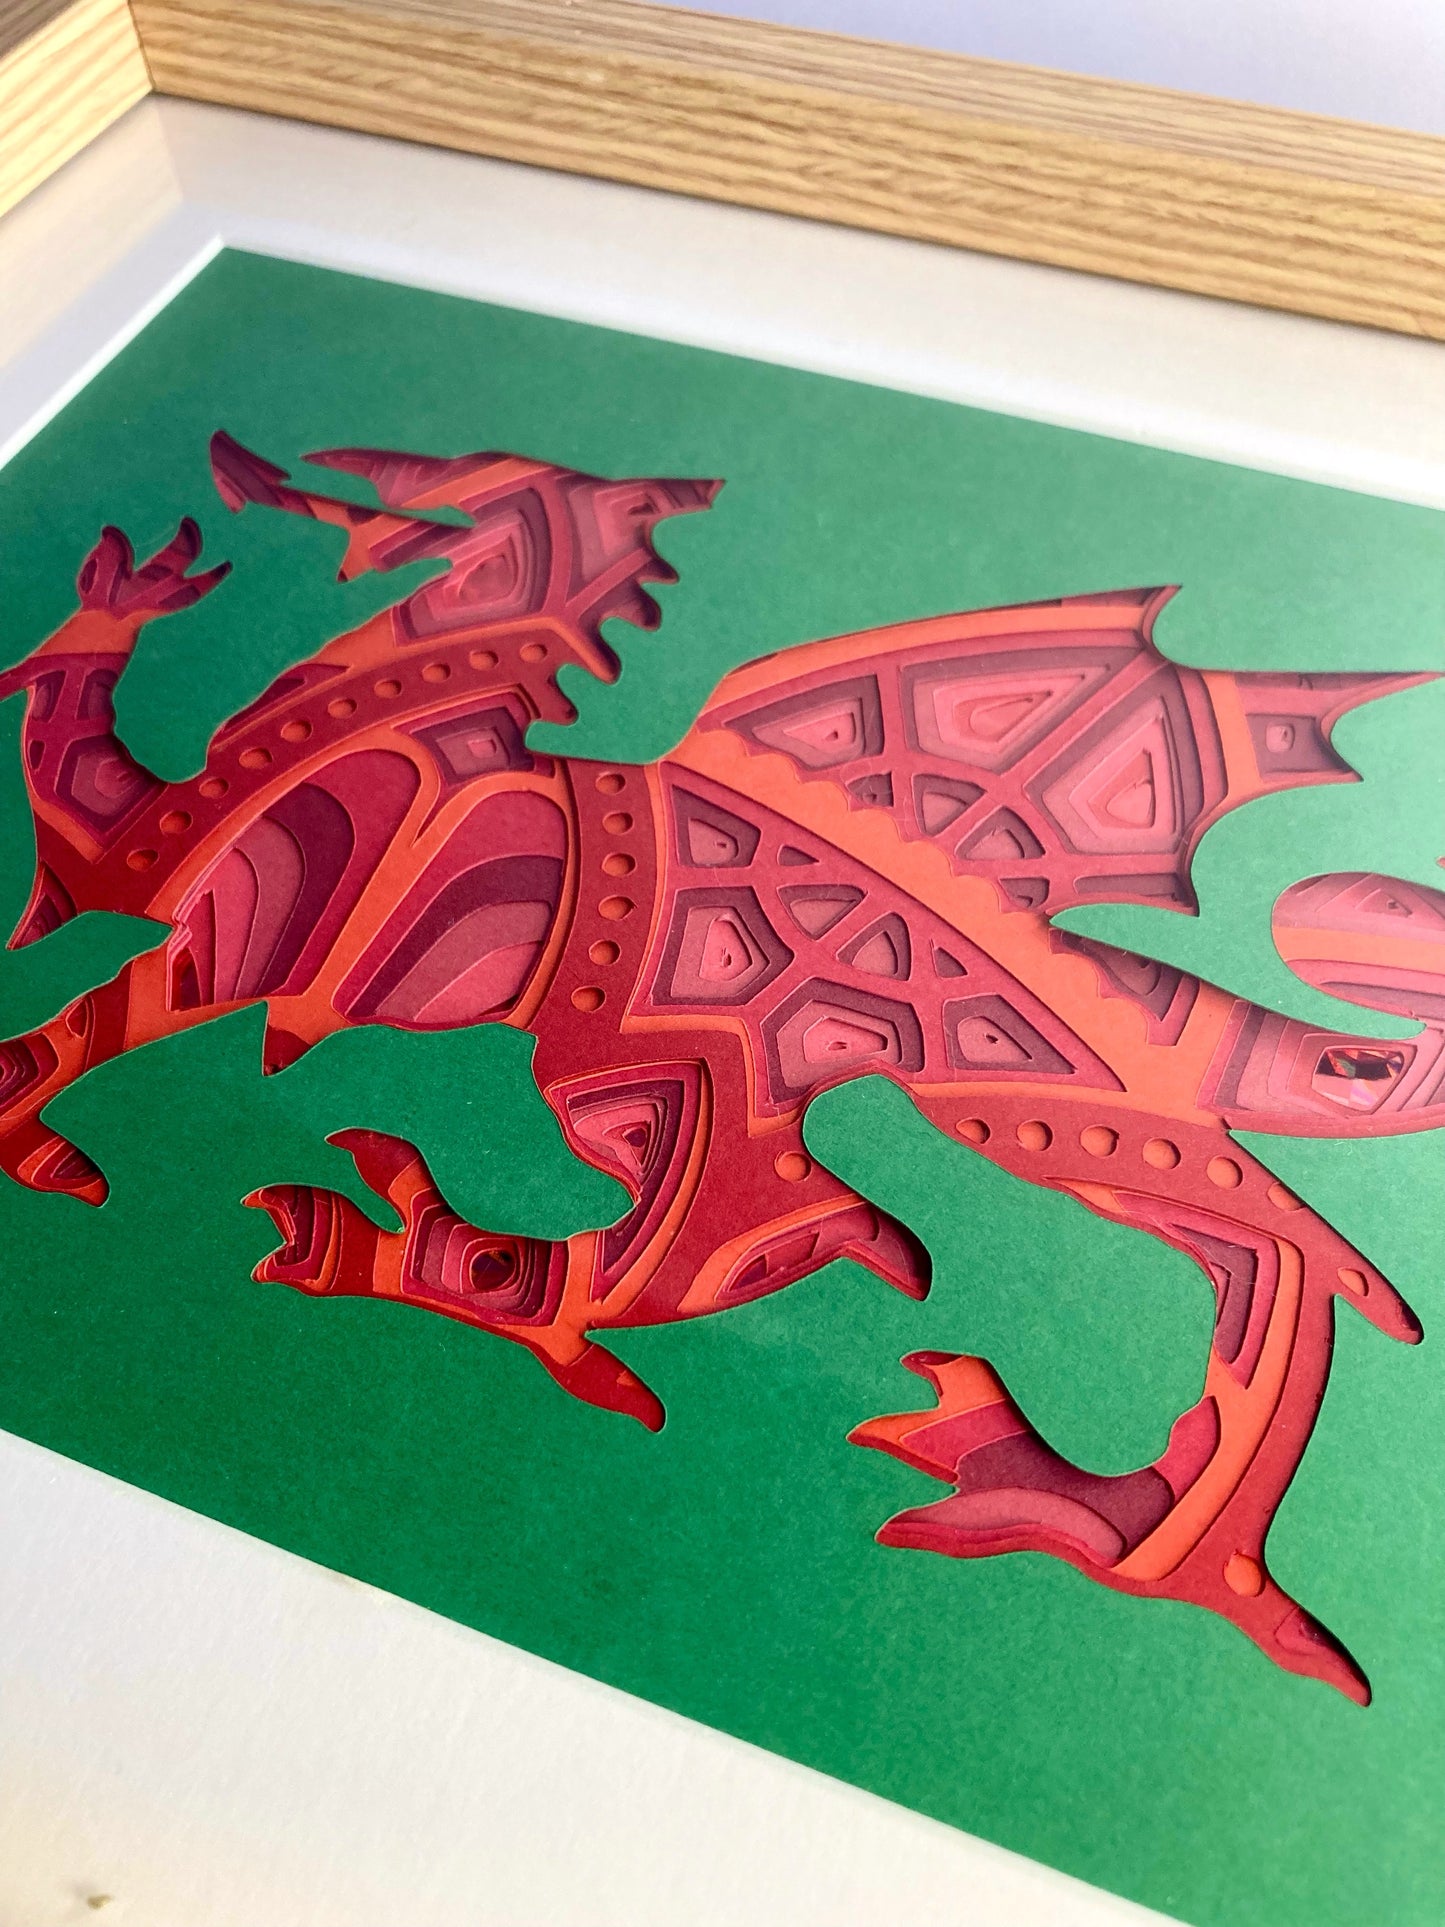 Welsh dragon multi layer mandala in frame